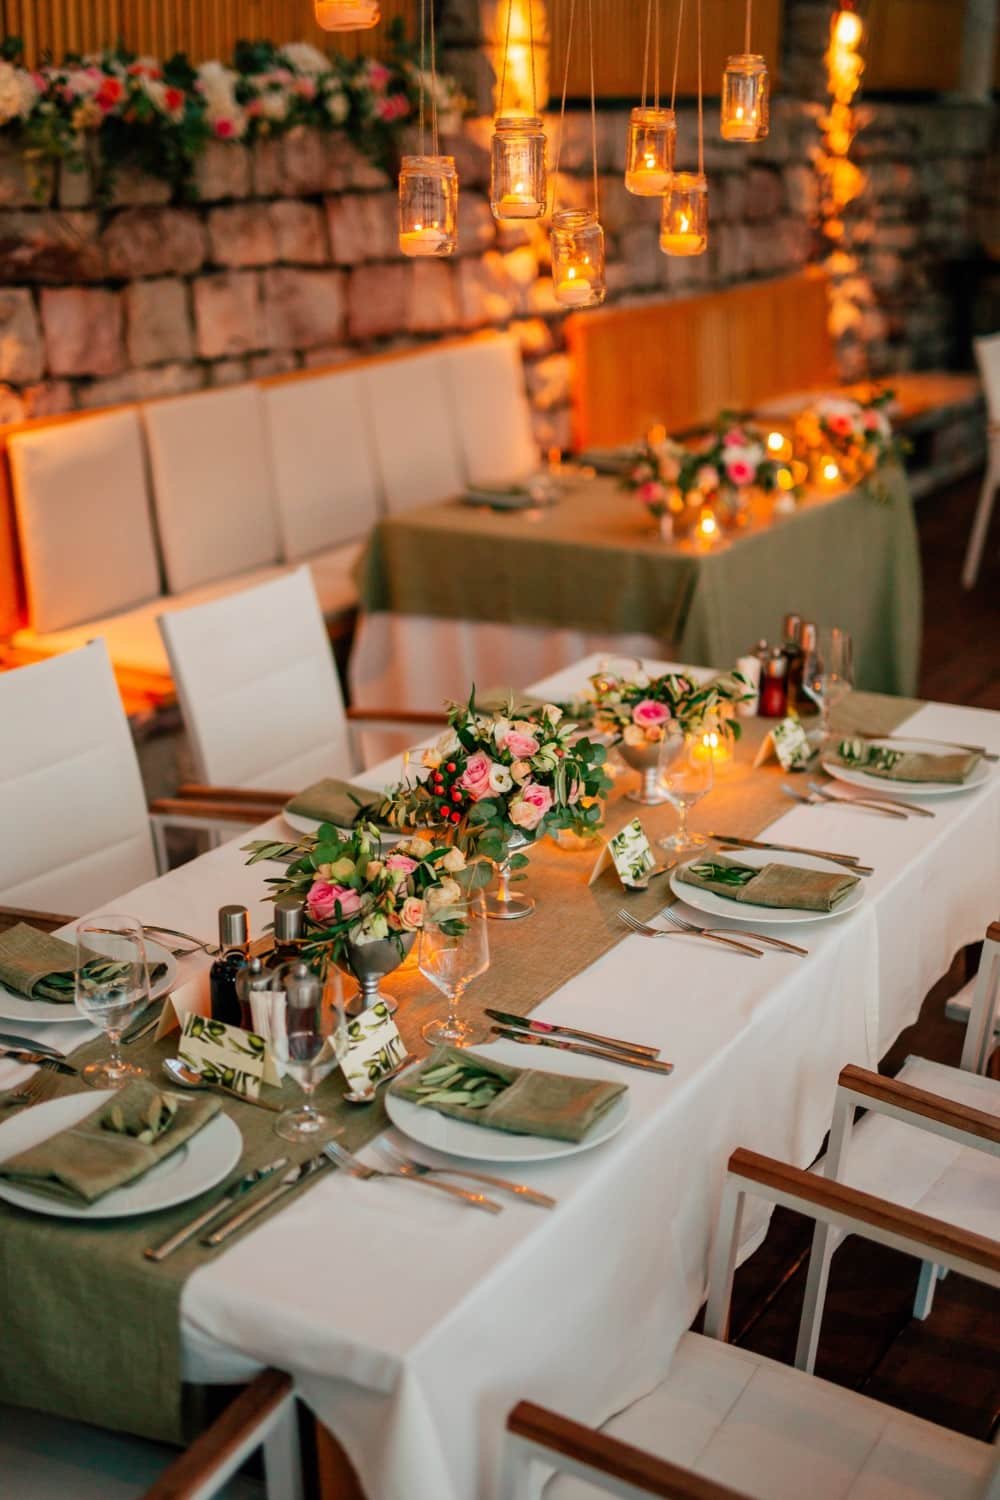 Restaurant Weddings  Best Spots for a Restaurant Wedding Dinner